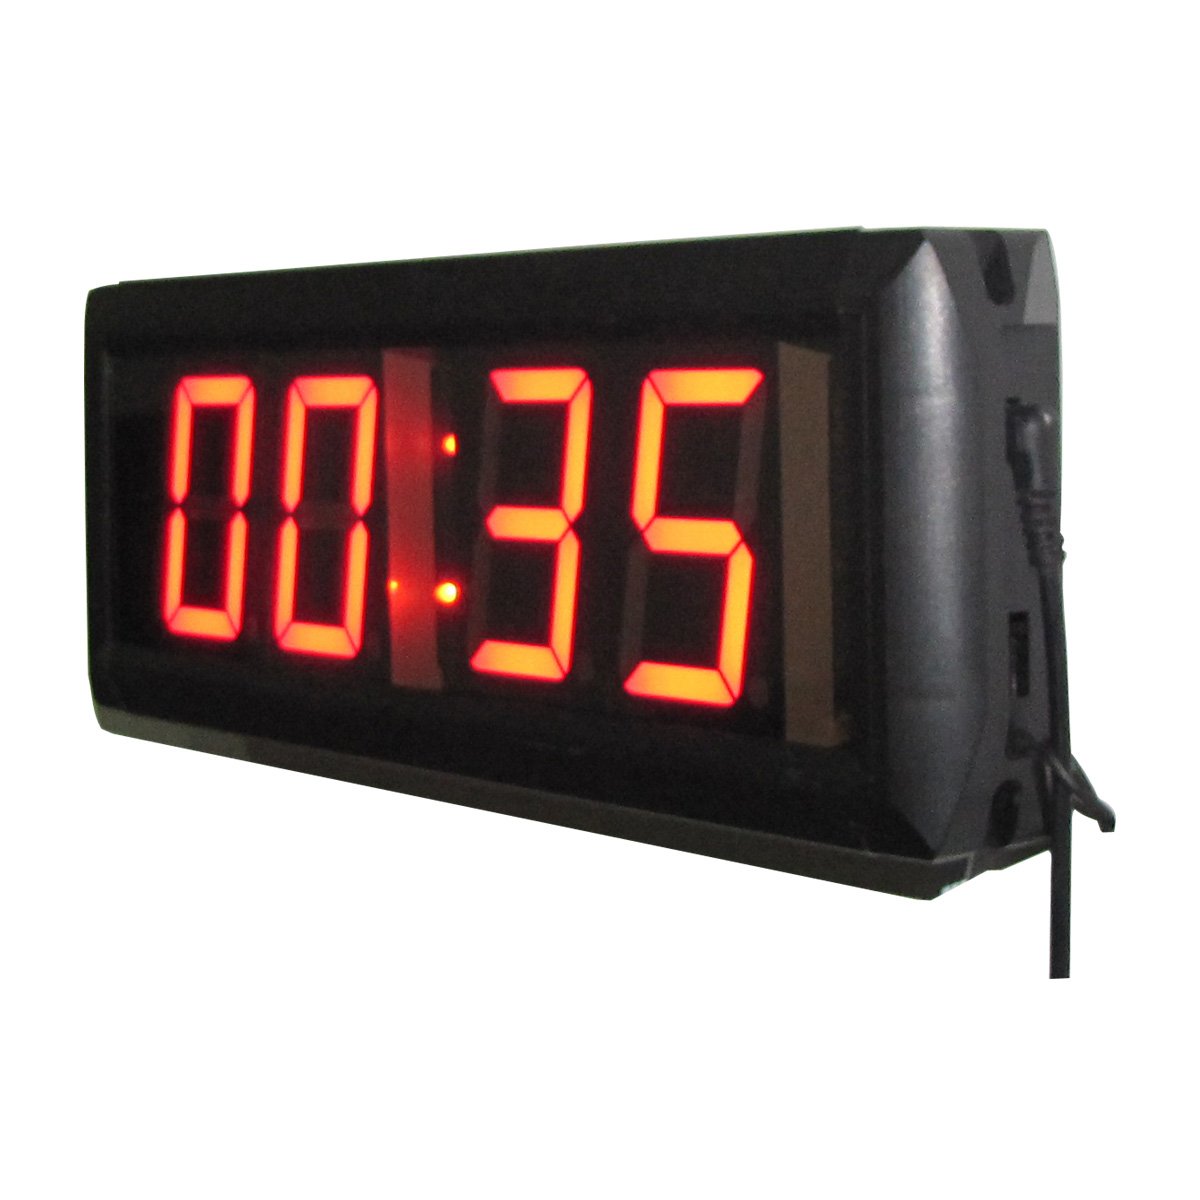 Ledgital 2.3" Countdown Timer with Real Time Clock LED Digital Wall Clock Brightness Adjustment